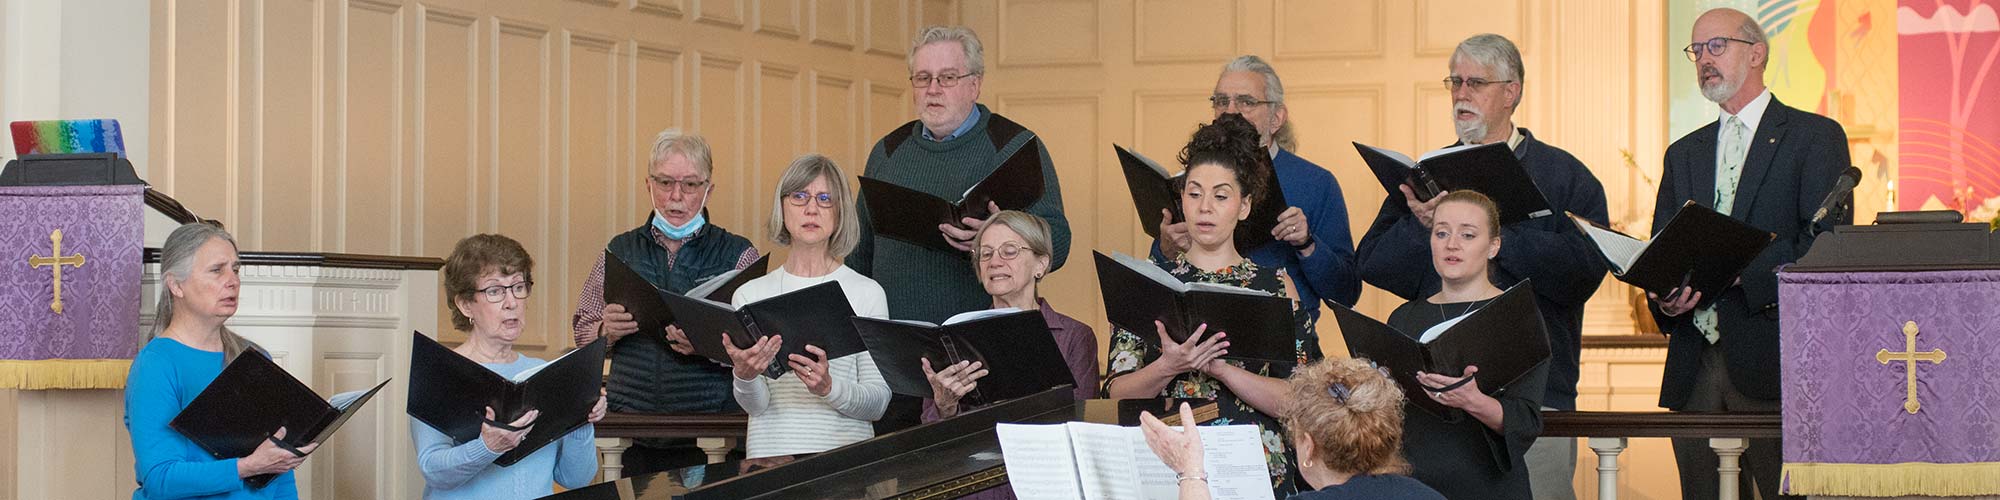 East Church adult choir singing